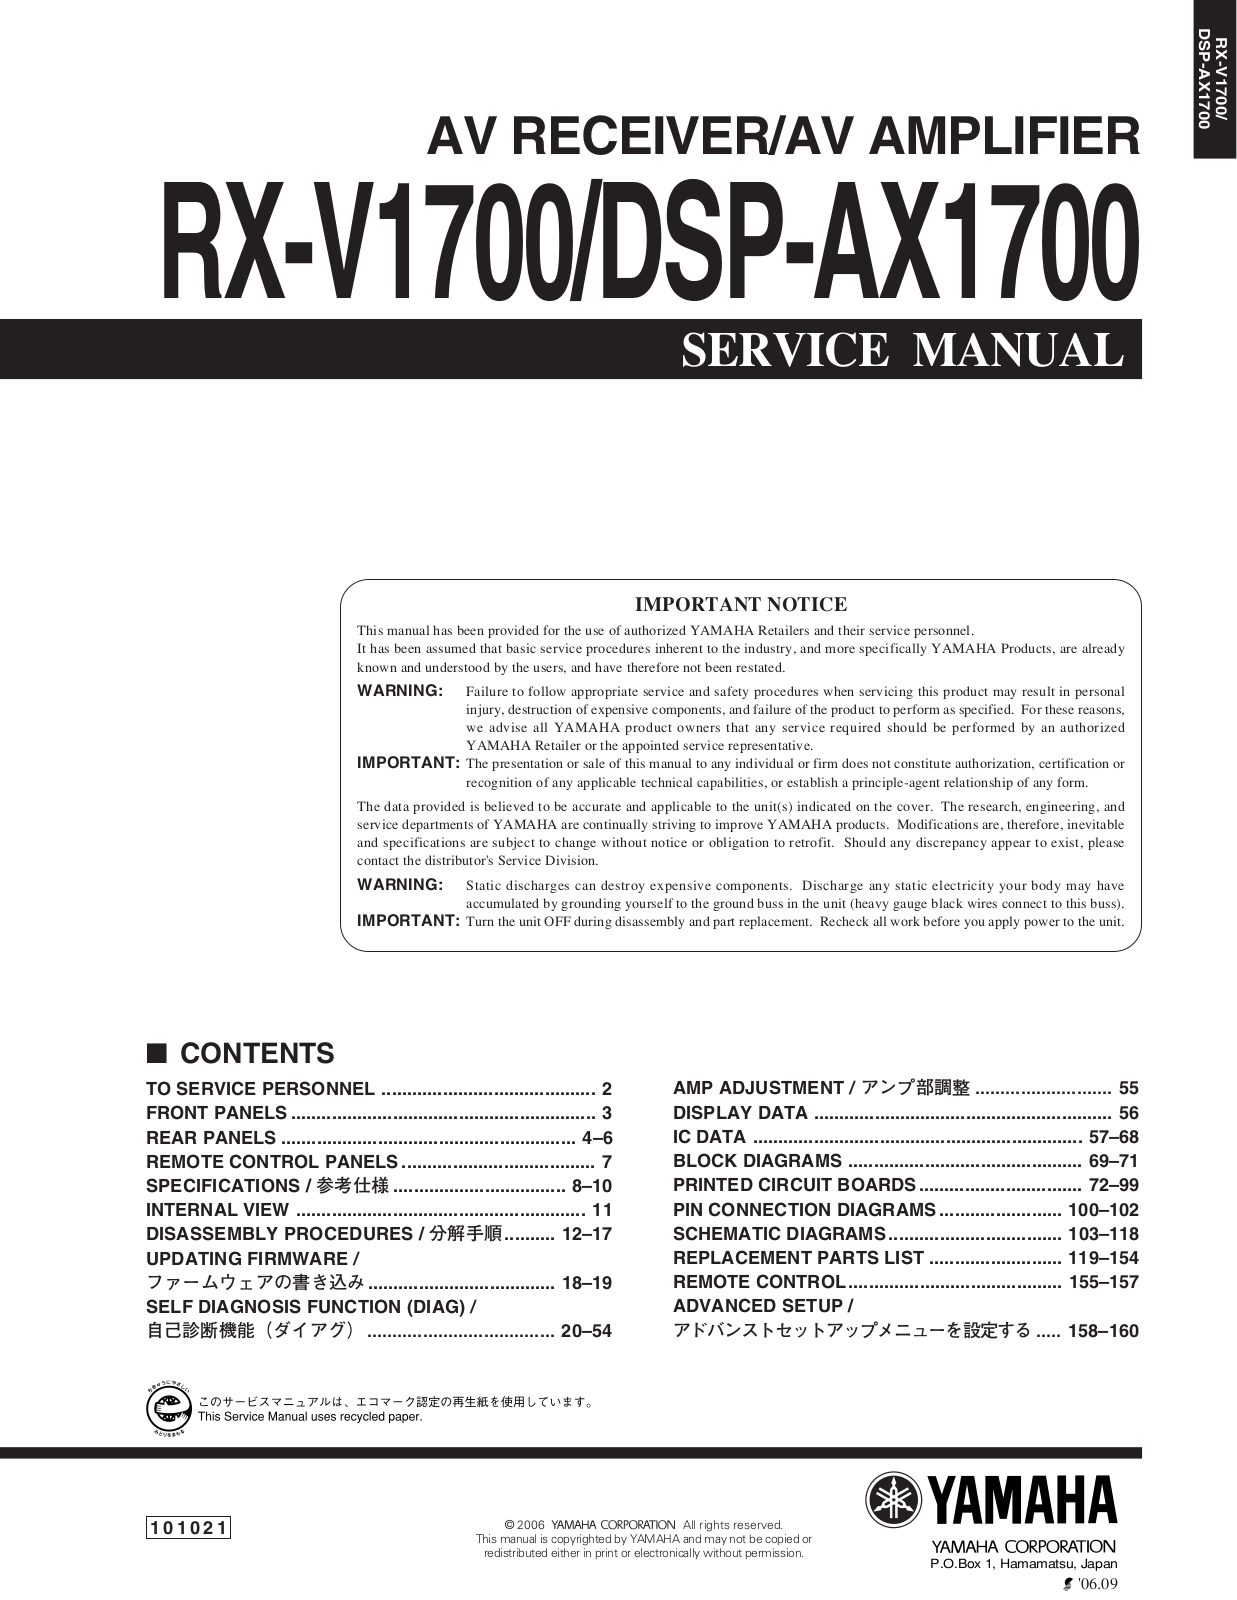 Yamaha RXV-1700, DSPAX-1700 Service manual